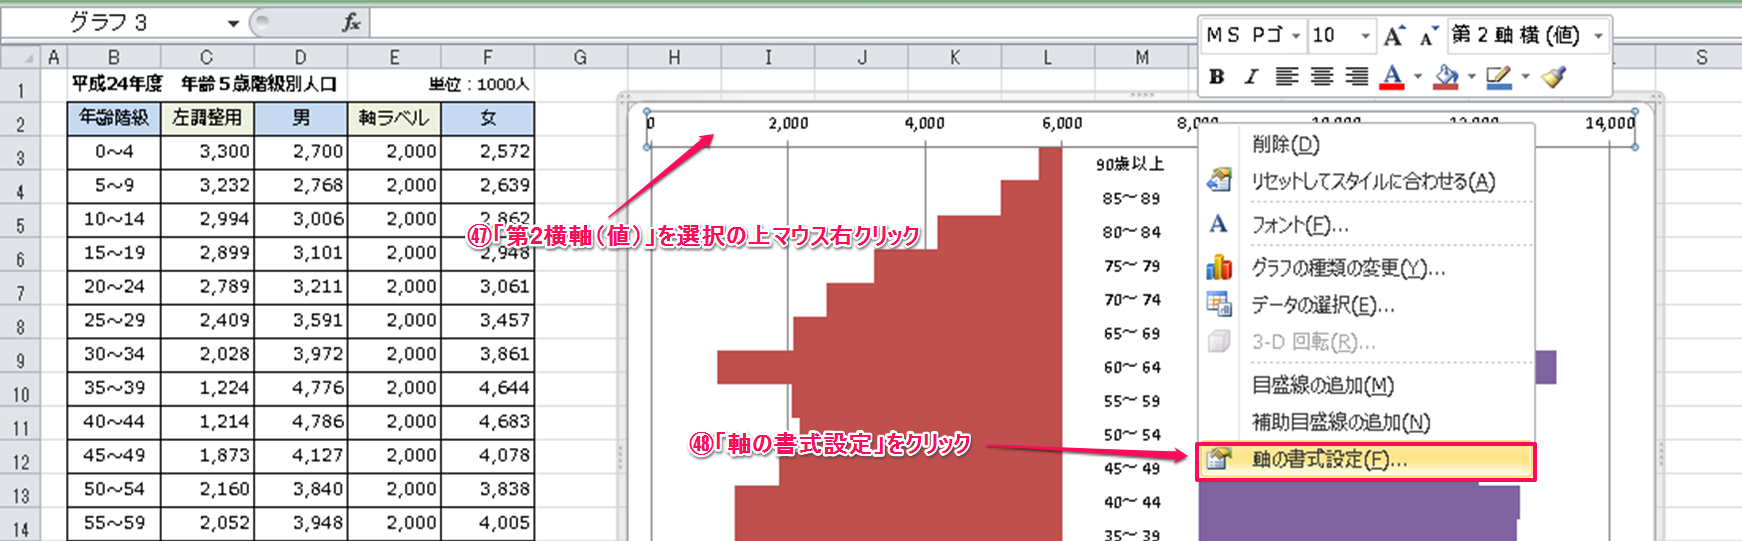 Excel10でピラミッドグラフを作成する方法 Excelを制する者は人生を制す No Excel No Life